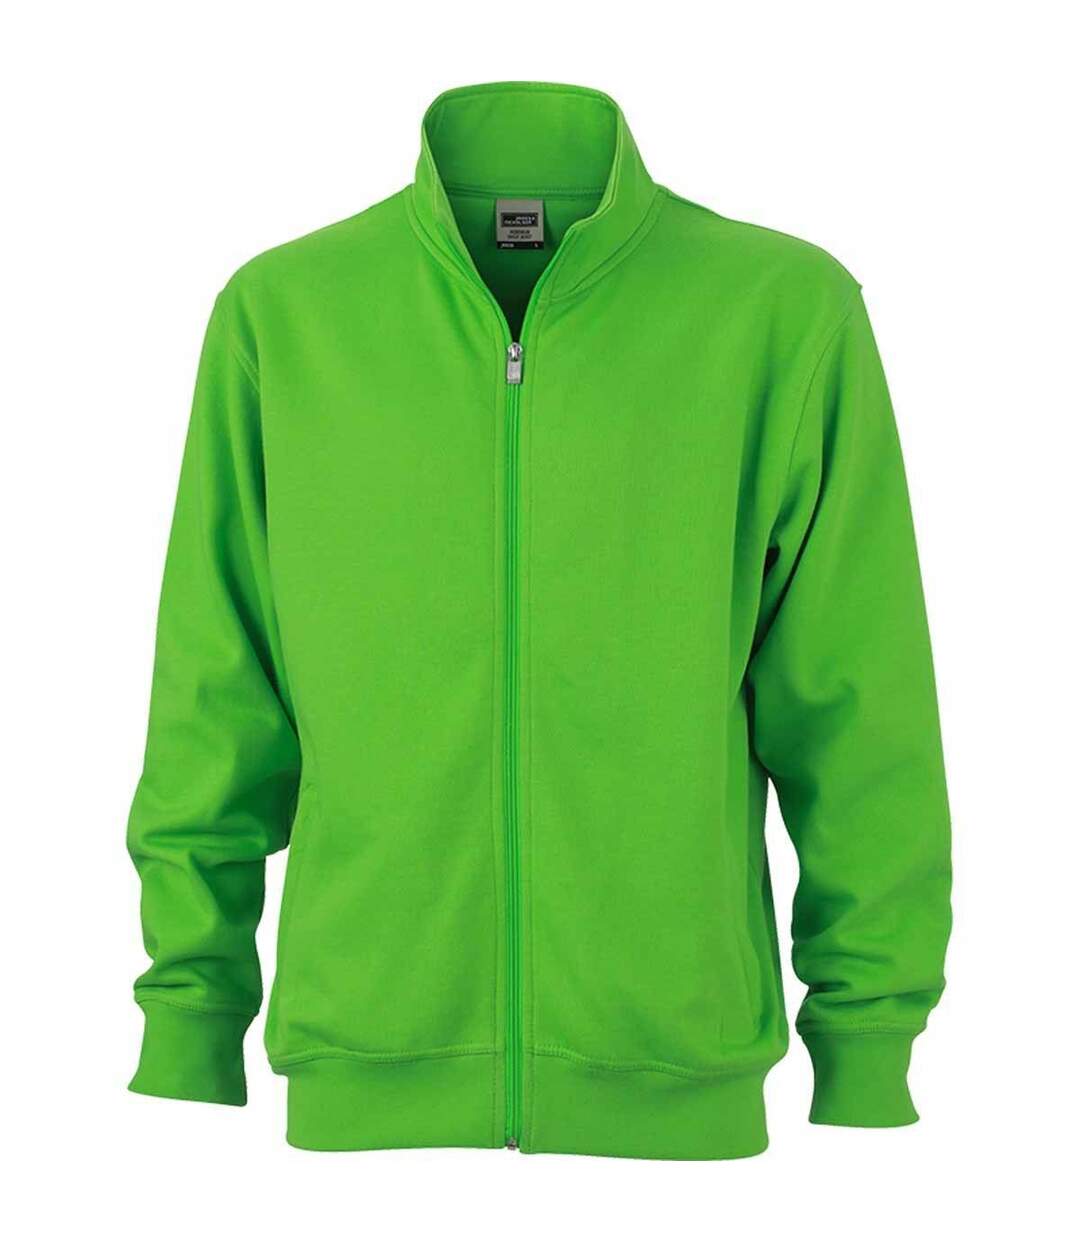 Sweat zippé workwear - Homme - JN836 - vert citron